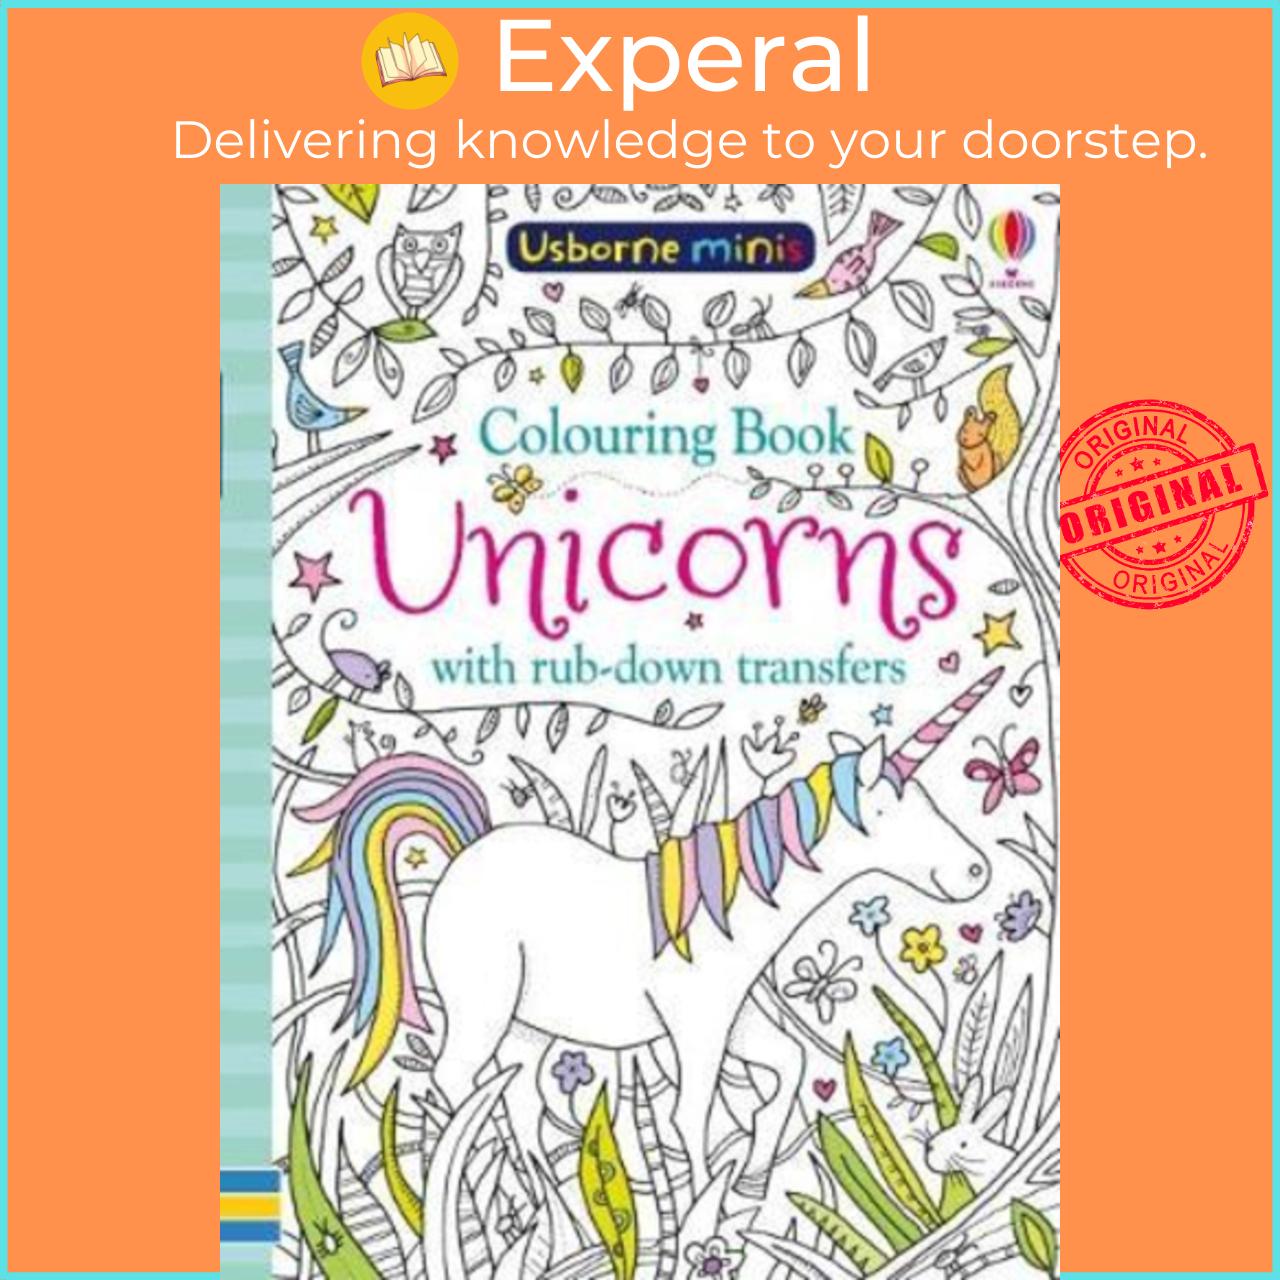 Hình ảnh Sách - Colouring Book Unicorns with Rub-Down Transfers by Sam Smith (UK edition, paperback)